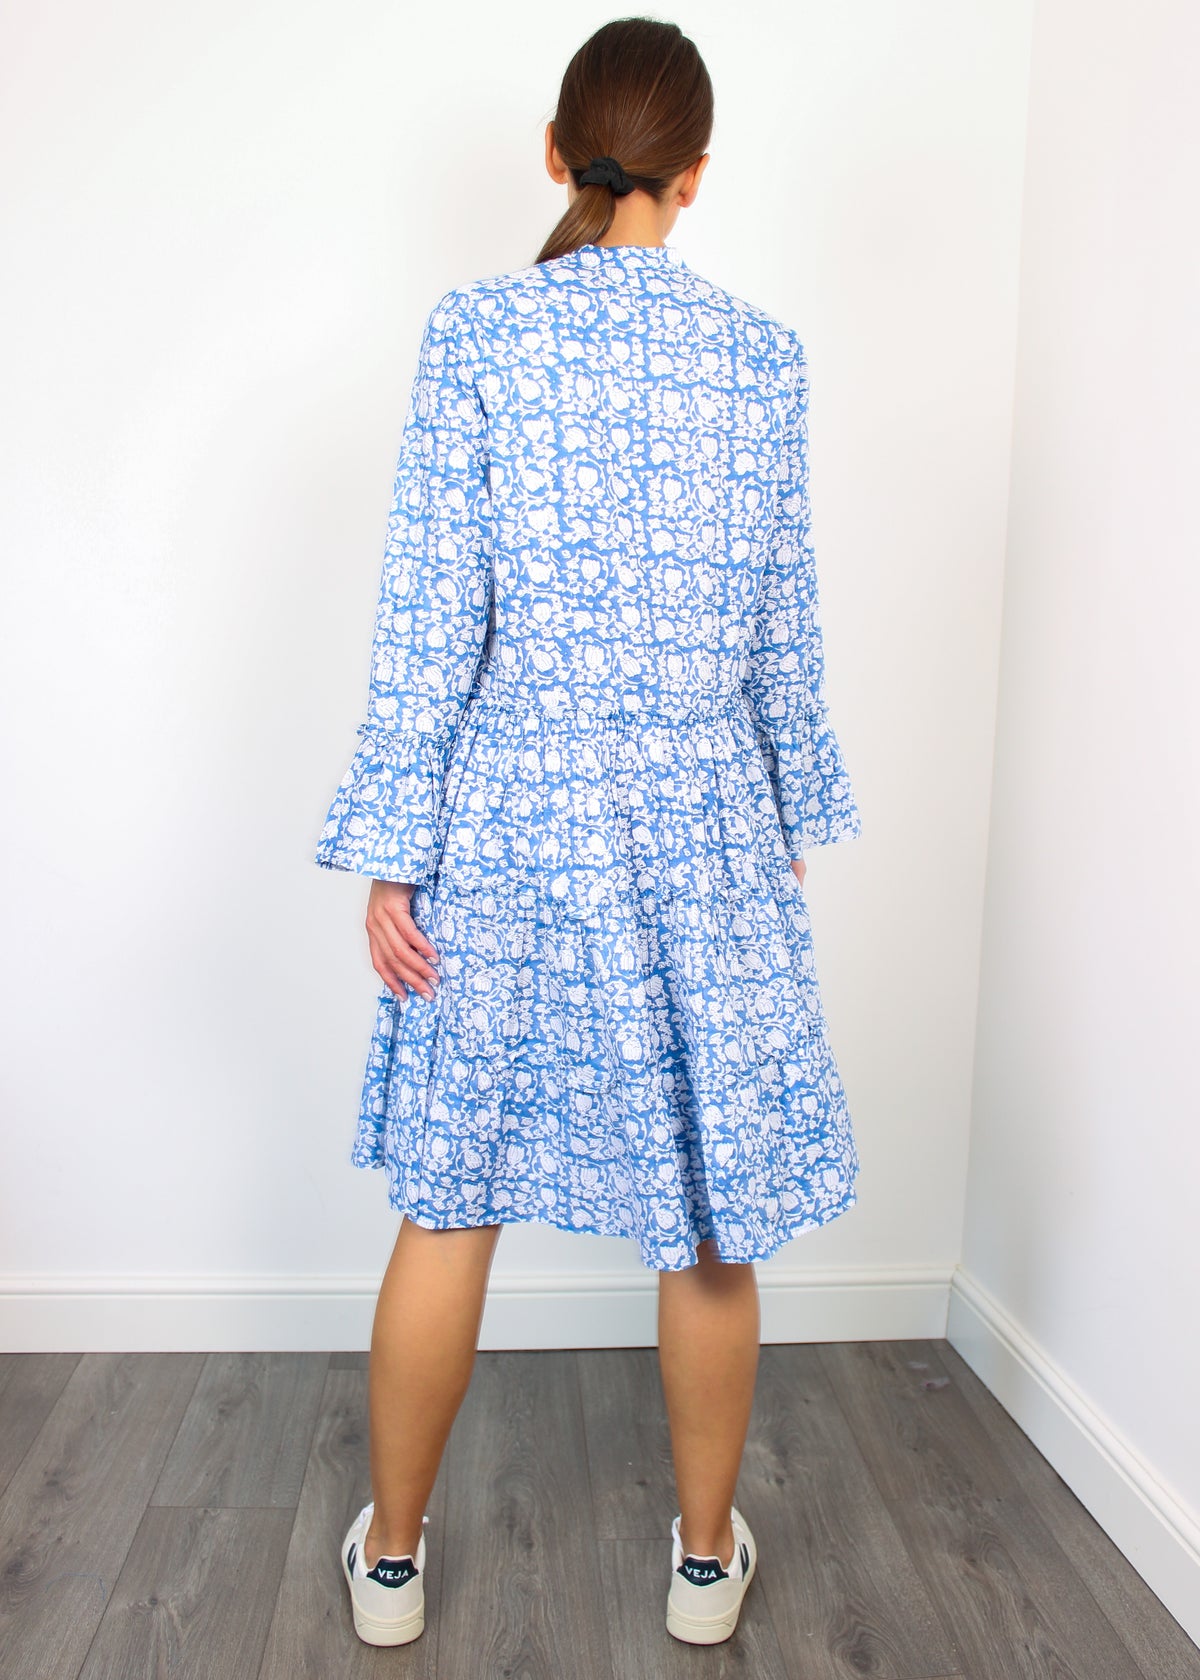 DREAM Elora Dress in Block Print